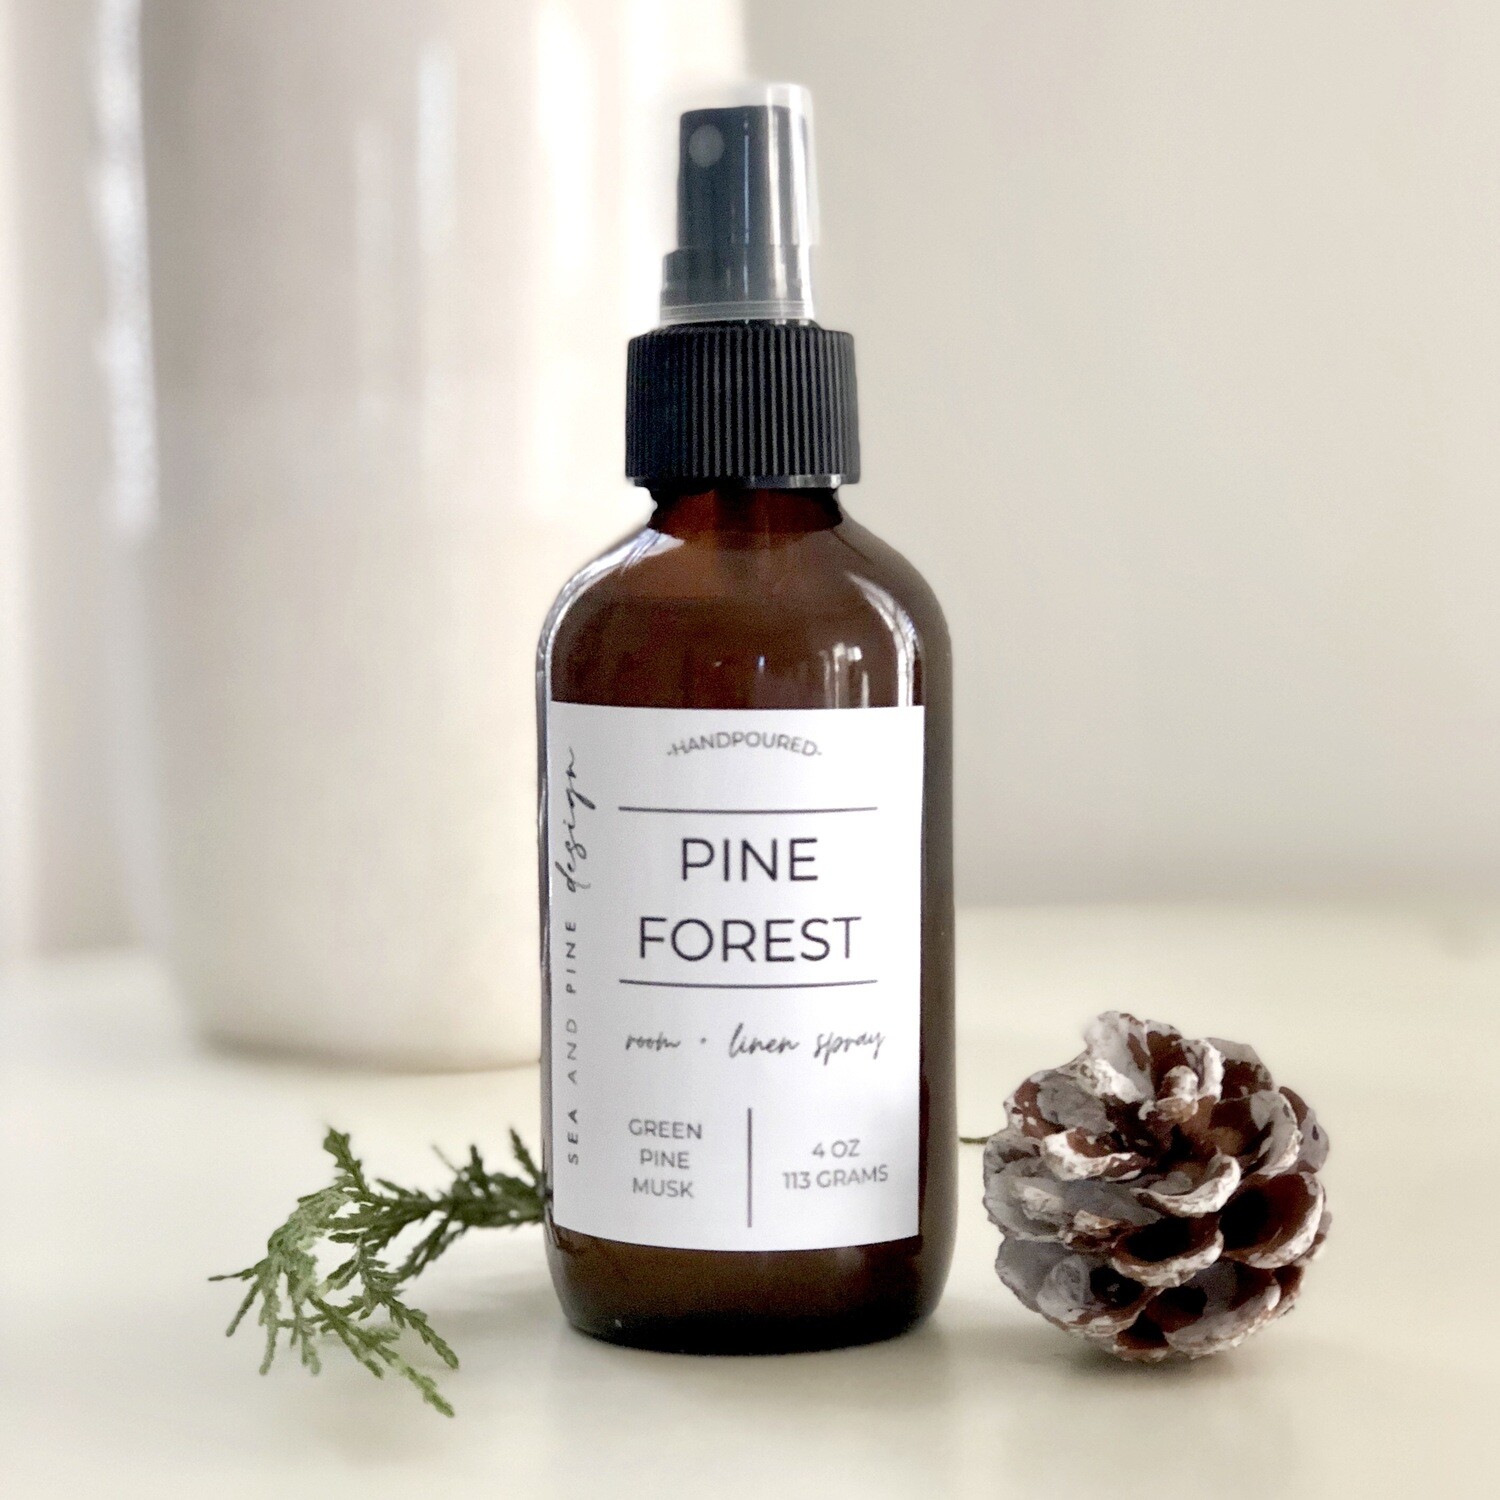 |PINE FOREST| Room + Linen Spray